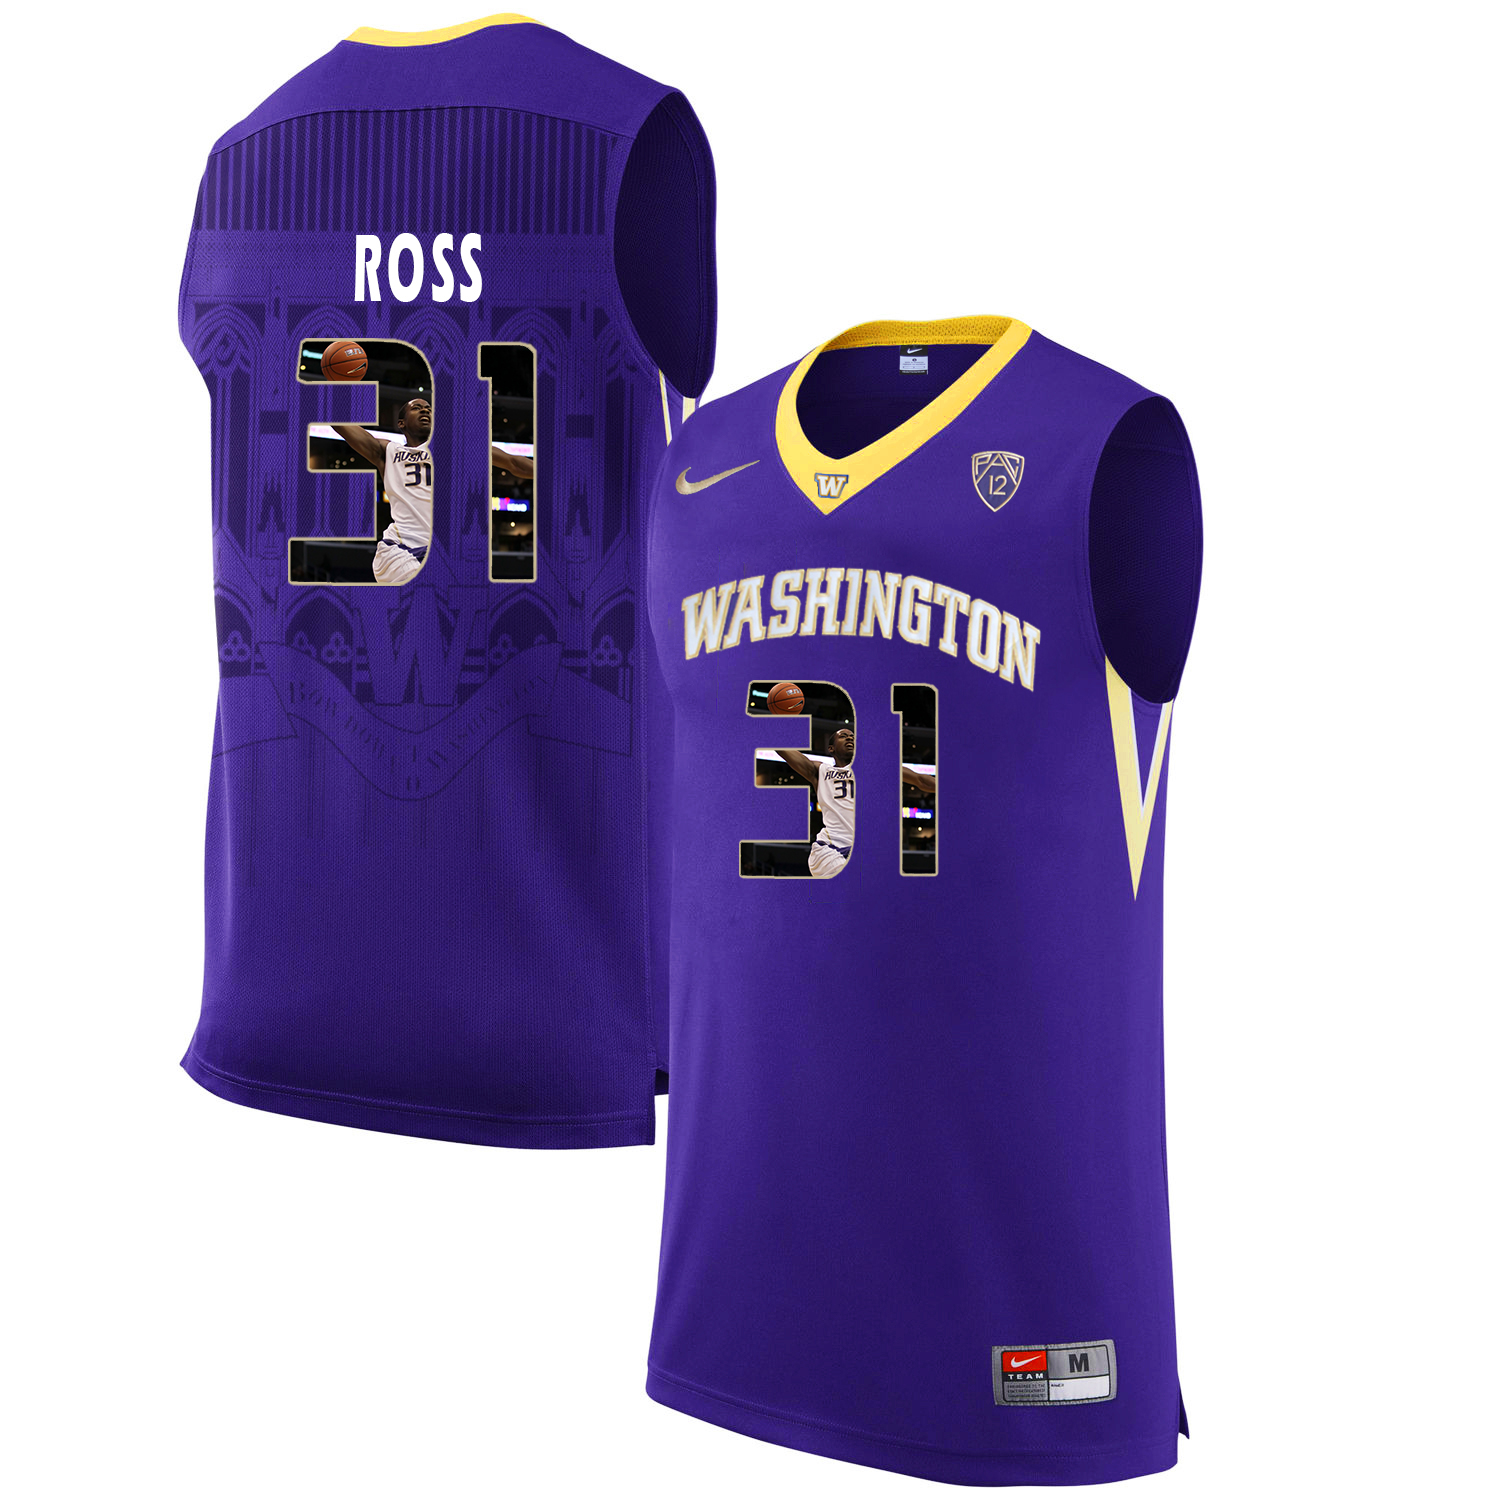 Washington Huskies 31 Terrence Ross Purple With Portait College Basketball Jersey